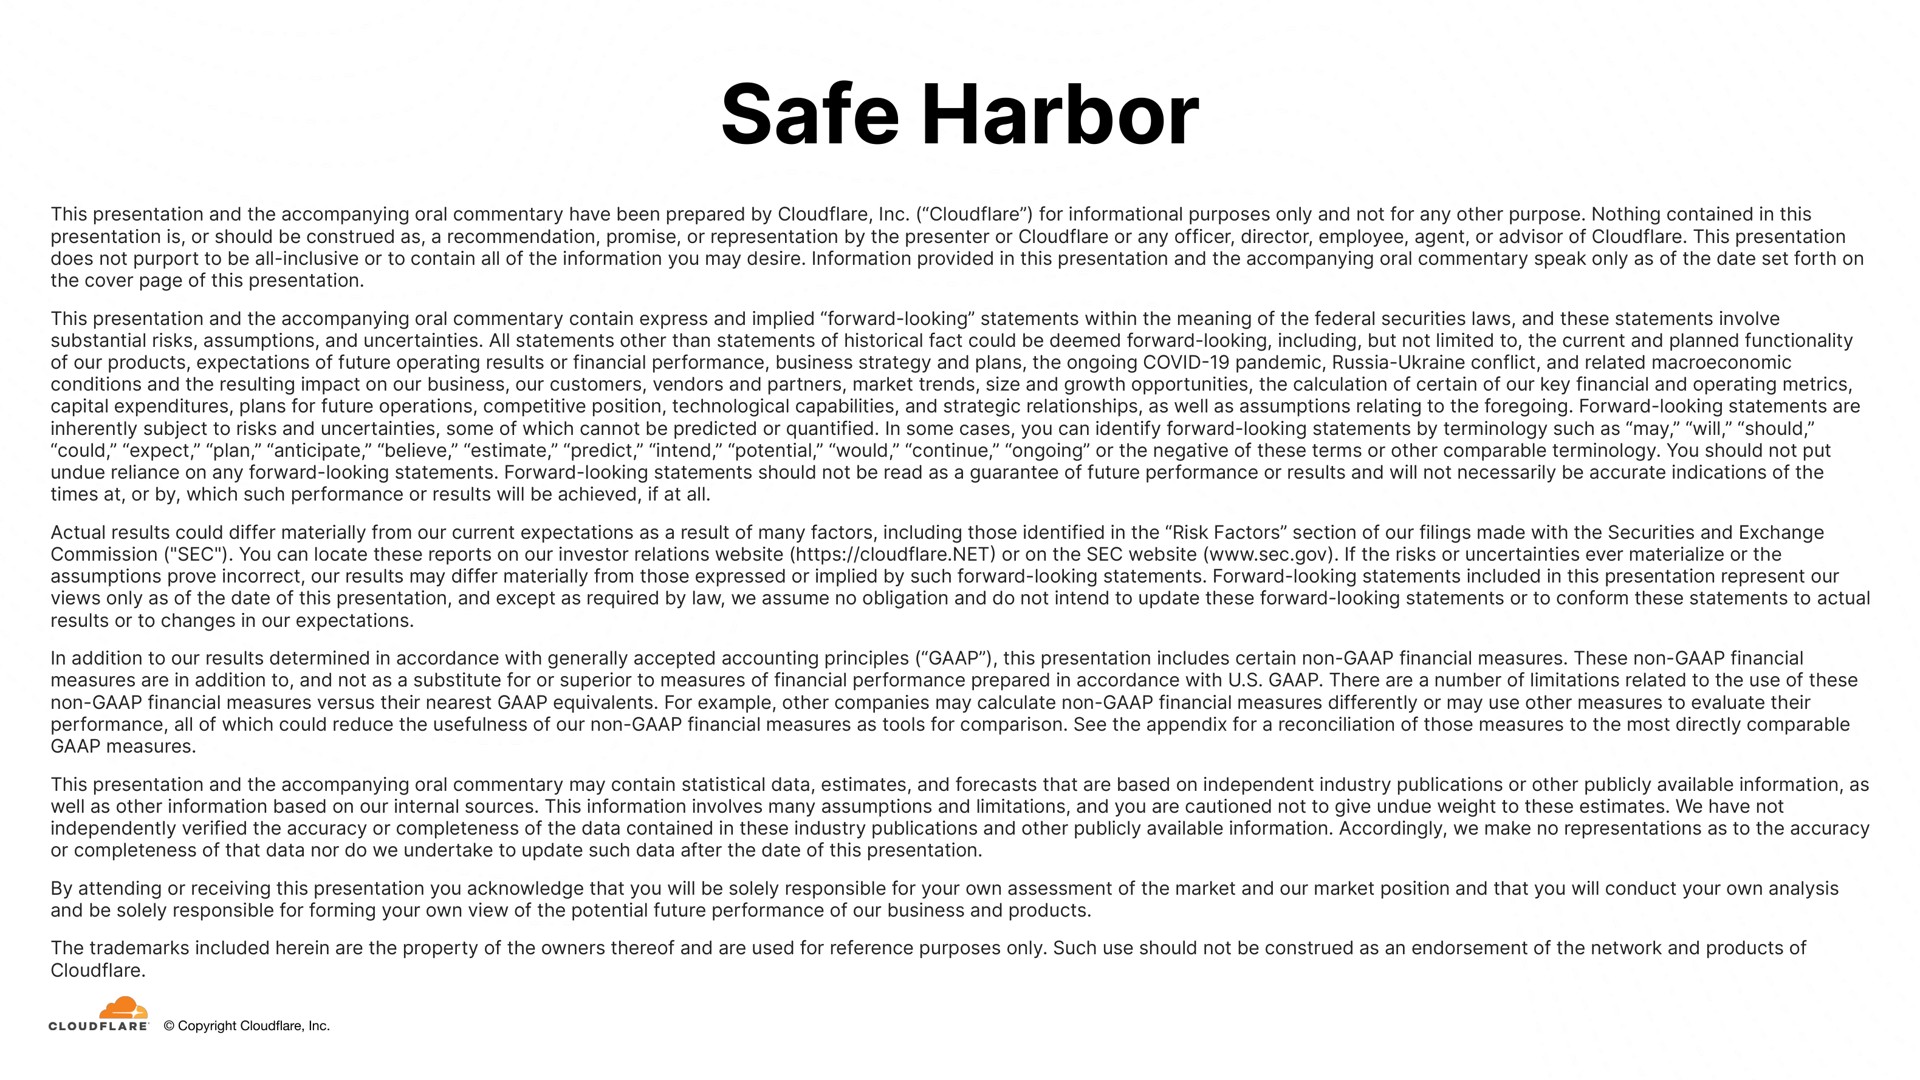 safe harbor | Cloudflare